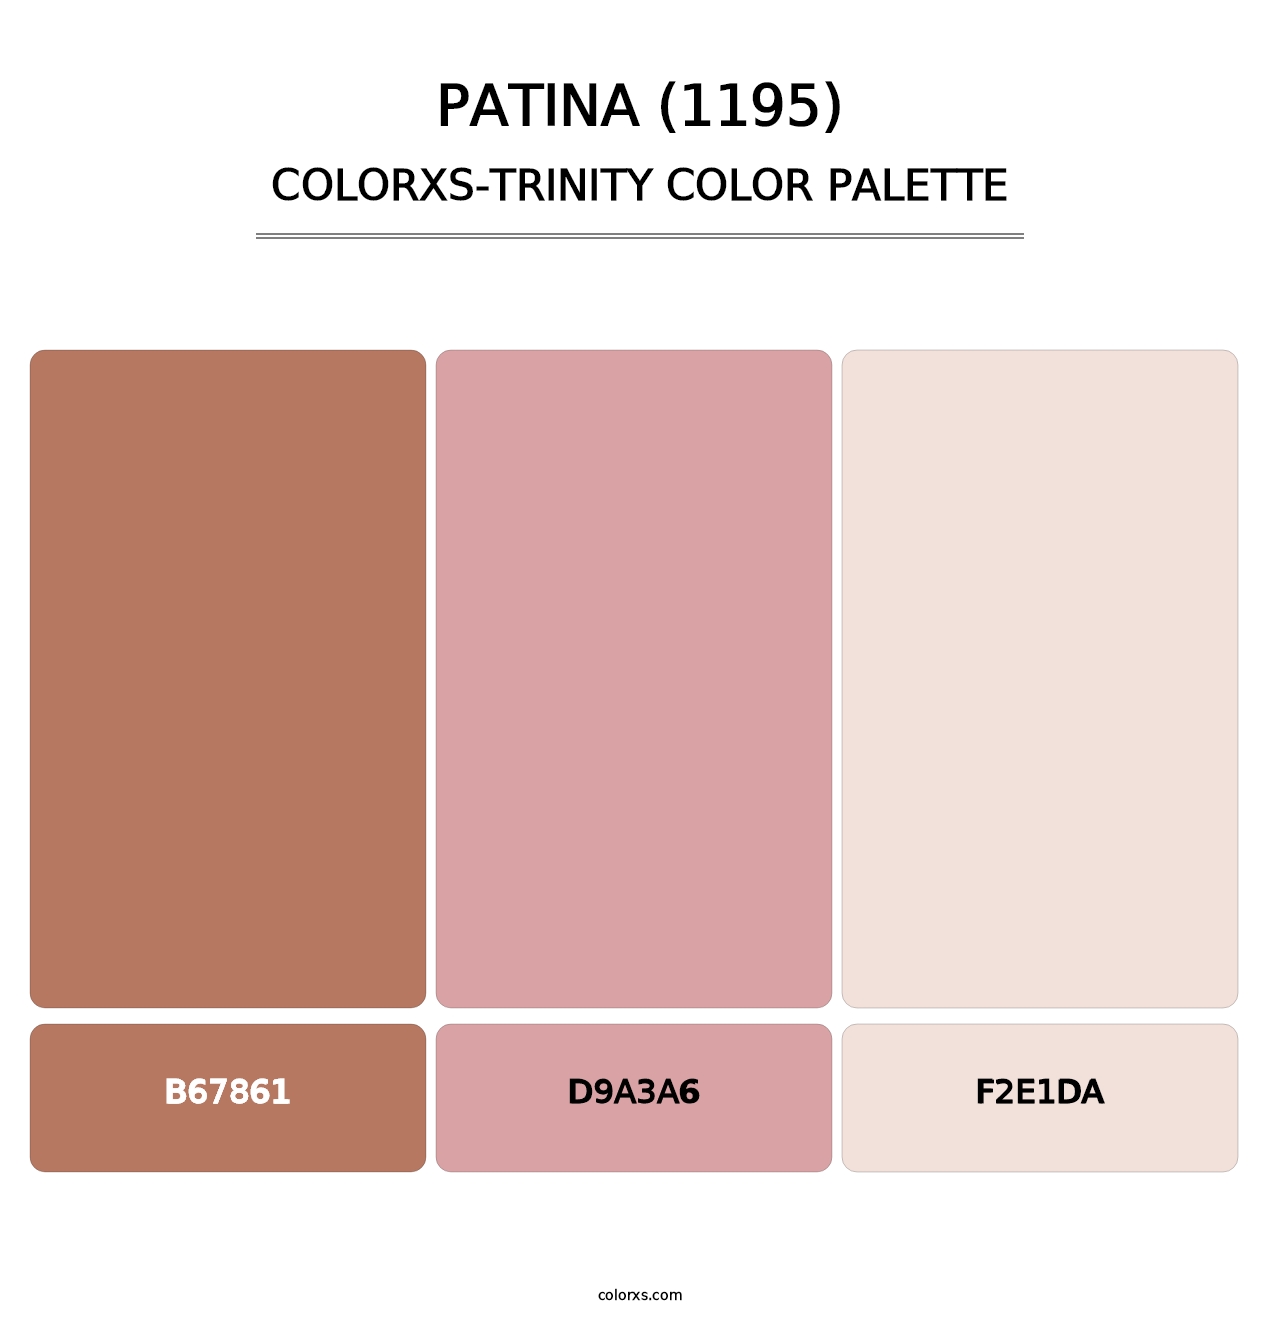 Patina (1195) - Colorxs Trinity Palette